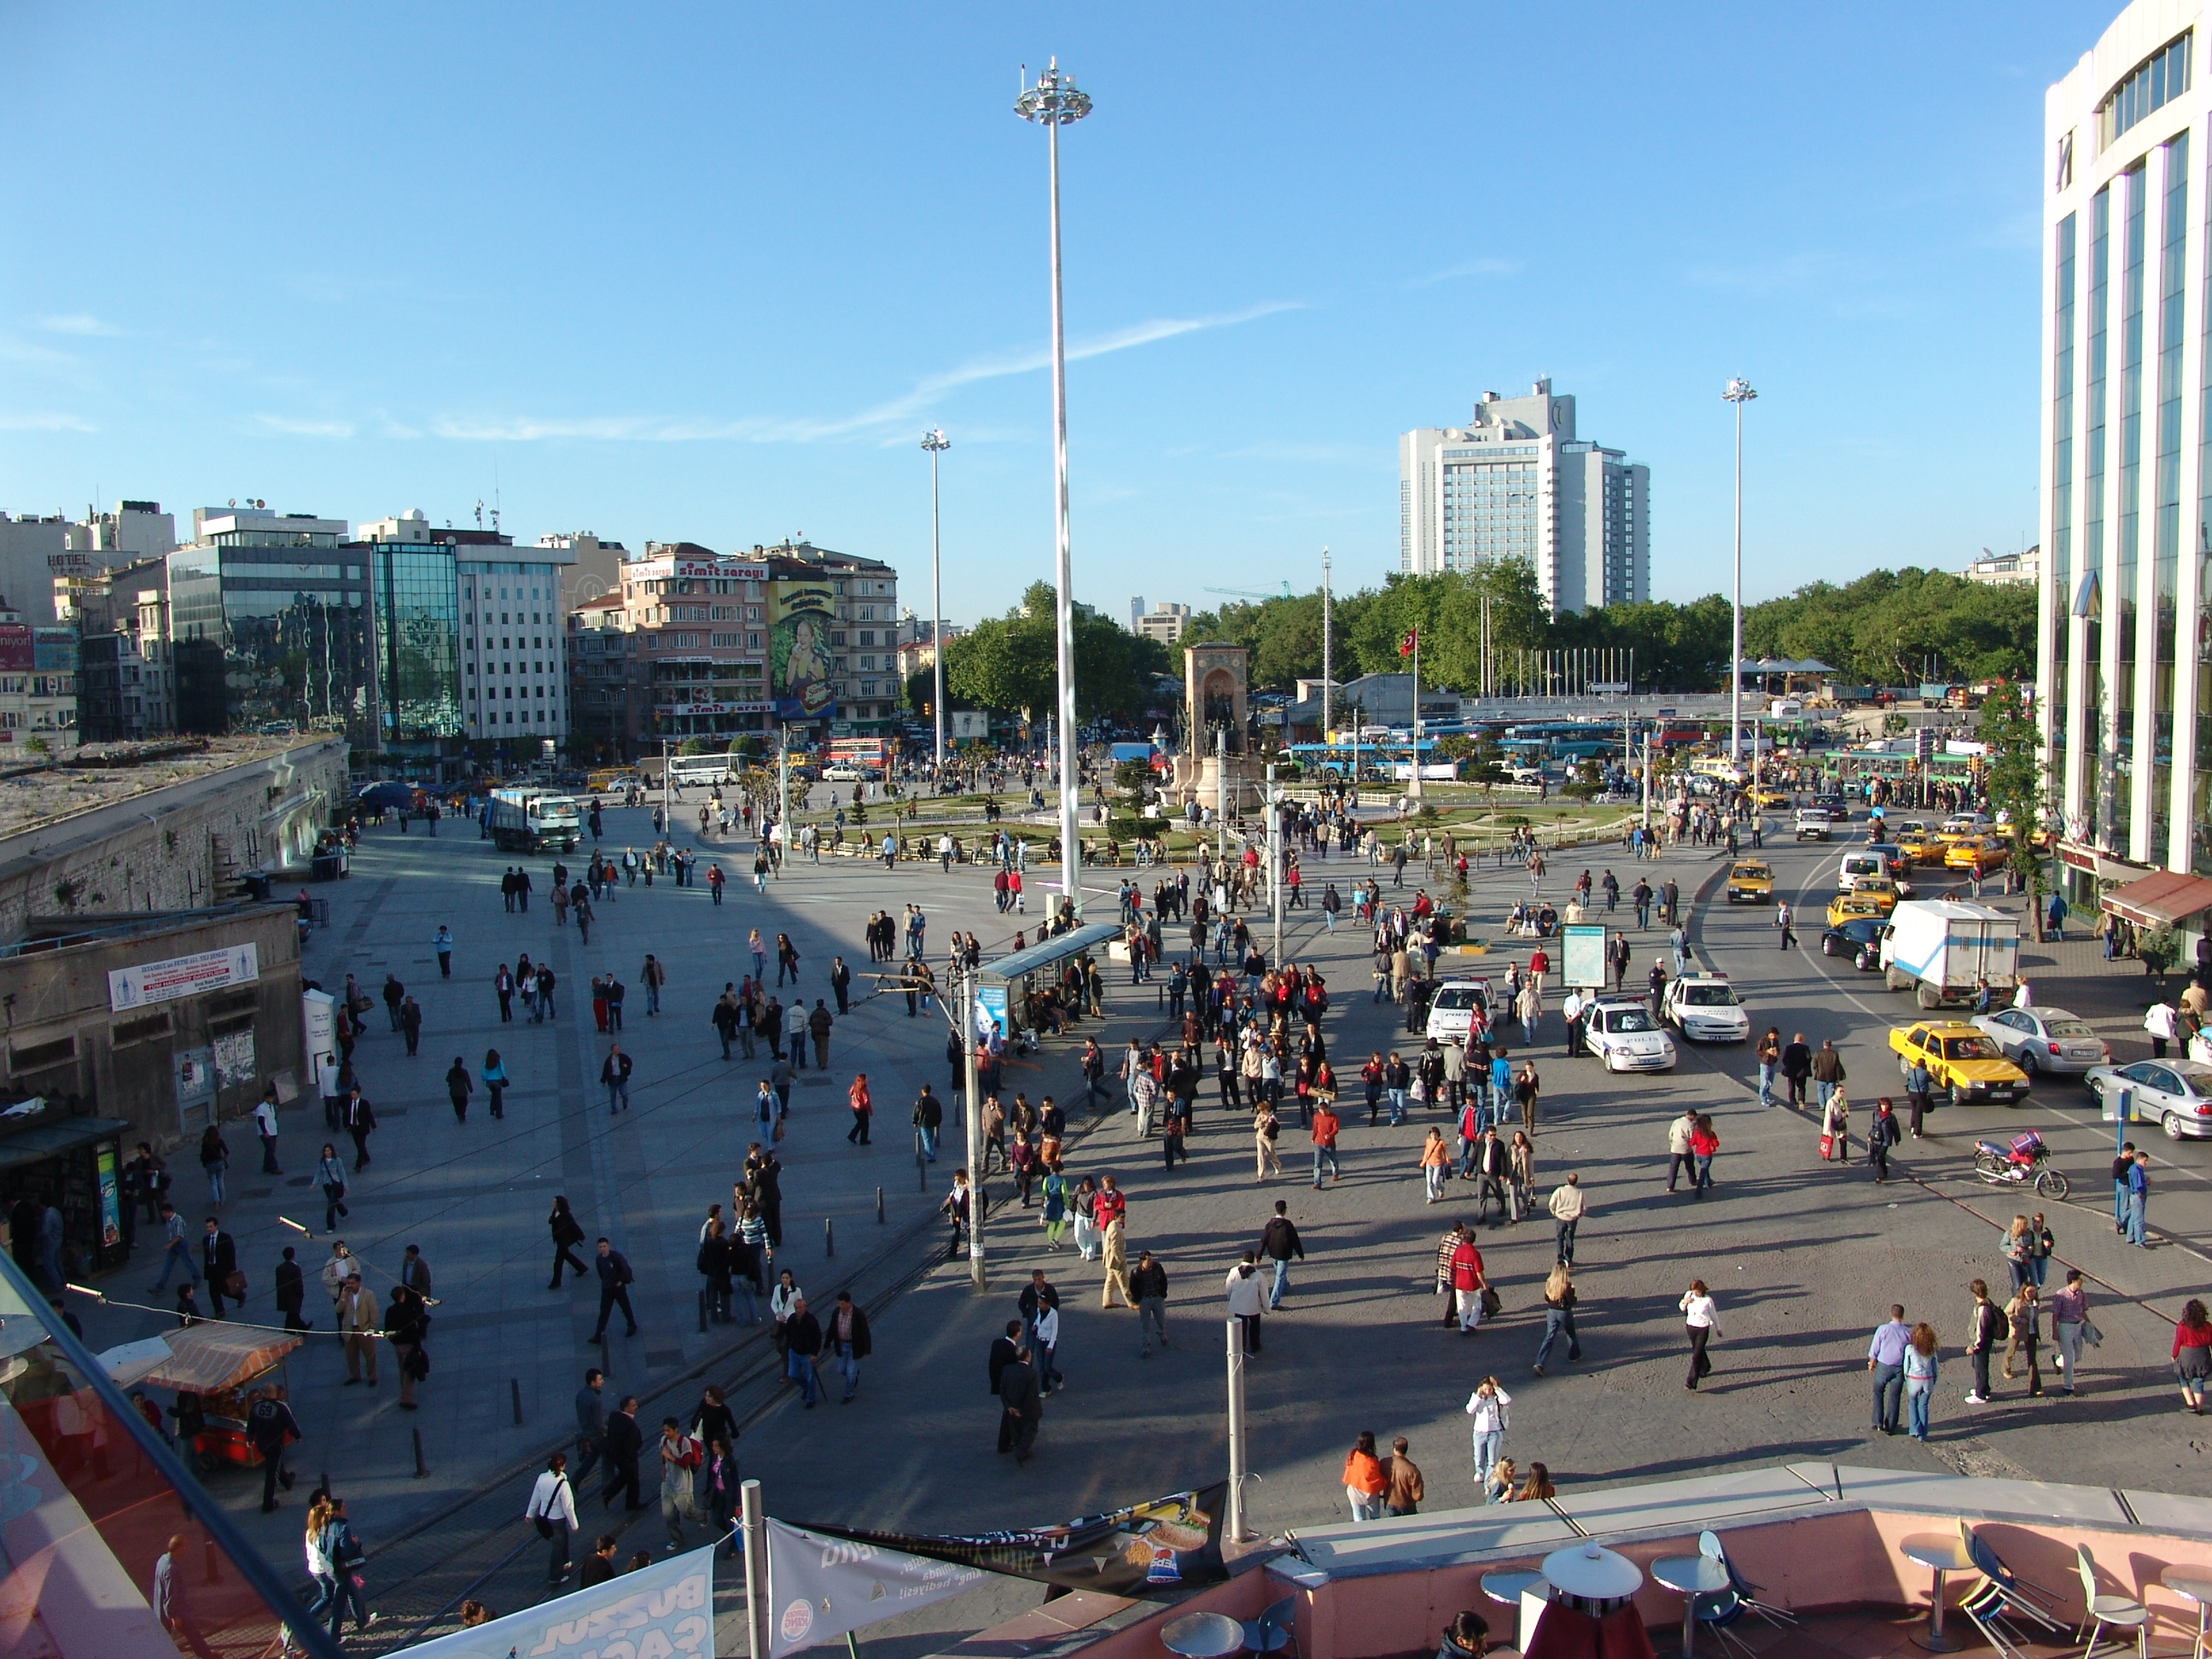 TaksimSquareIstanbul.jpg